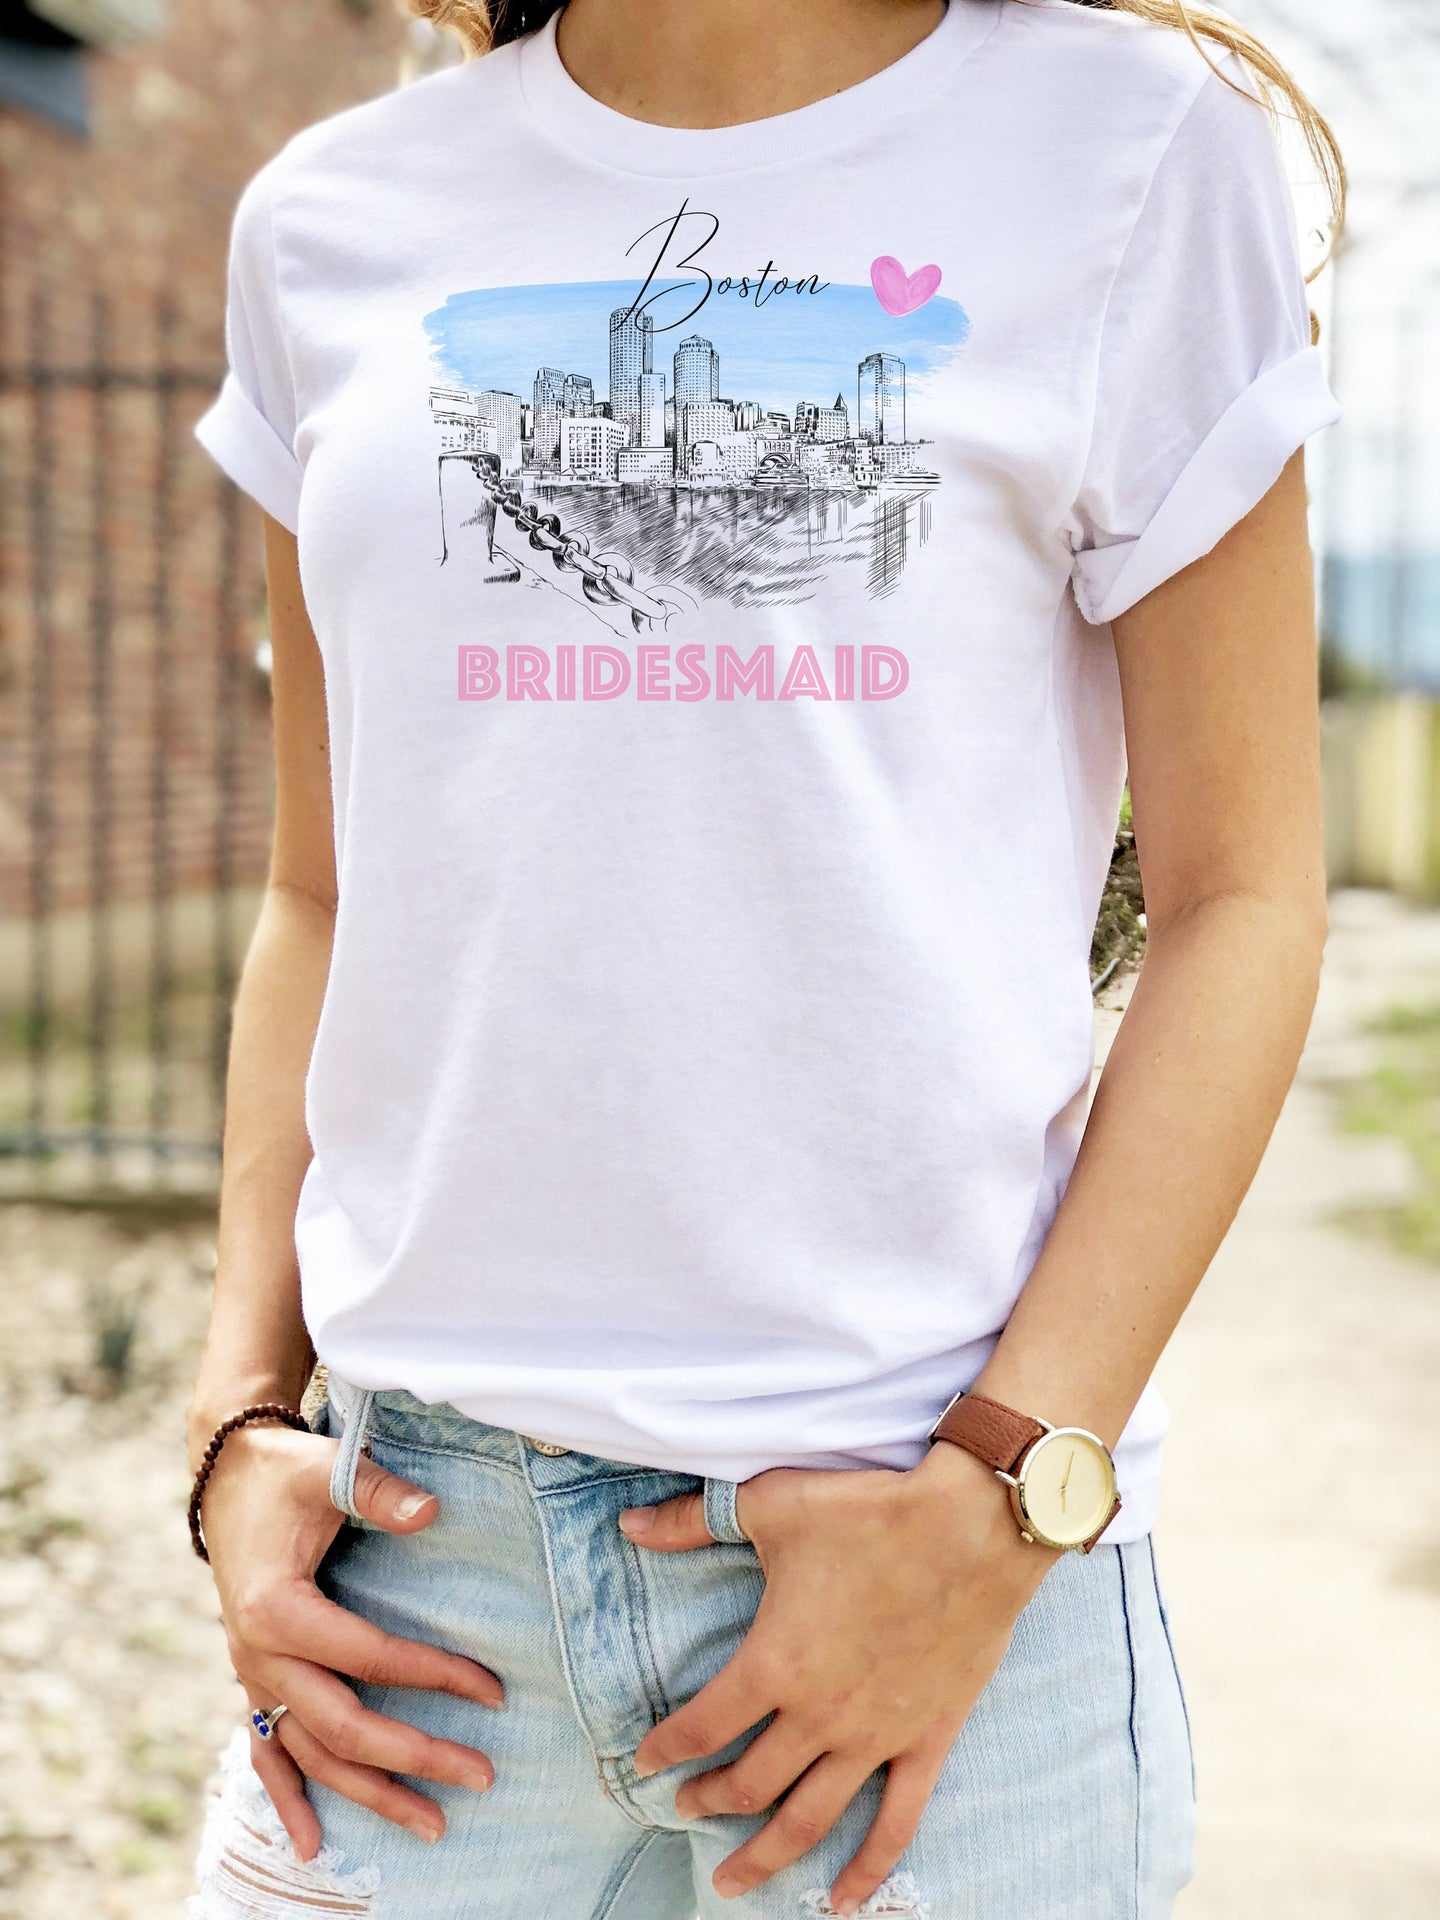 Boston Bridesmaid Shirt, T-Shirt, Boston, MA Water View Skyline, Bride Tee, Wedding Shirt, Bride, Bridal Shower Gift, Bachelorette, Gift